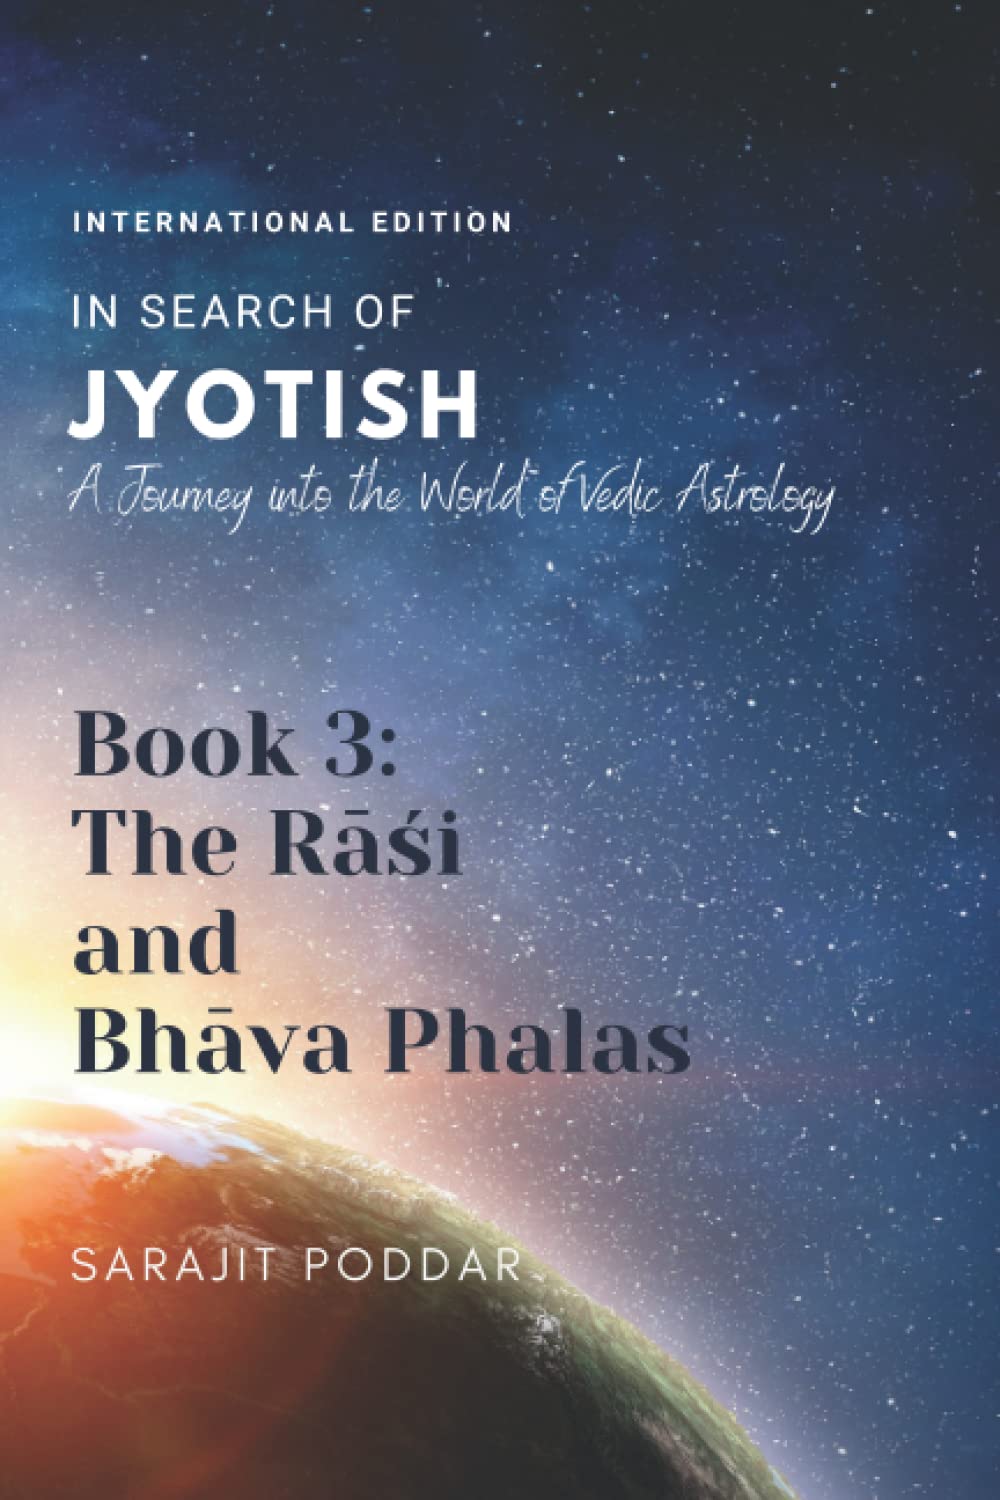 The Rasi and Bhava Phalas: A Journey into the World of Jyotish